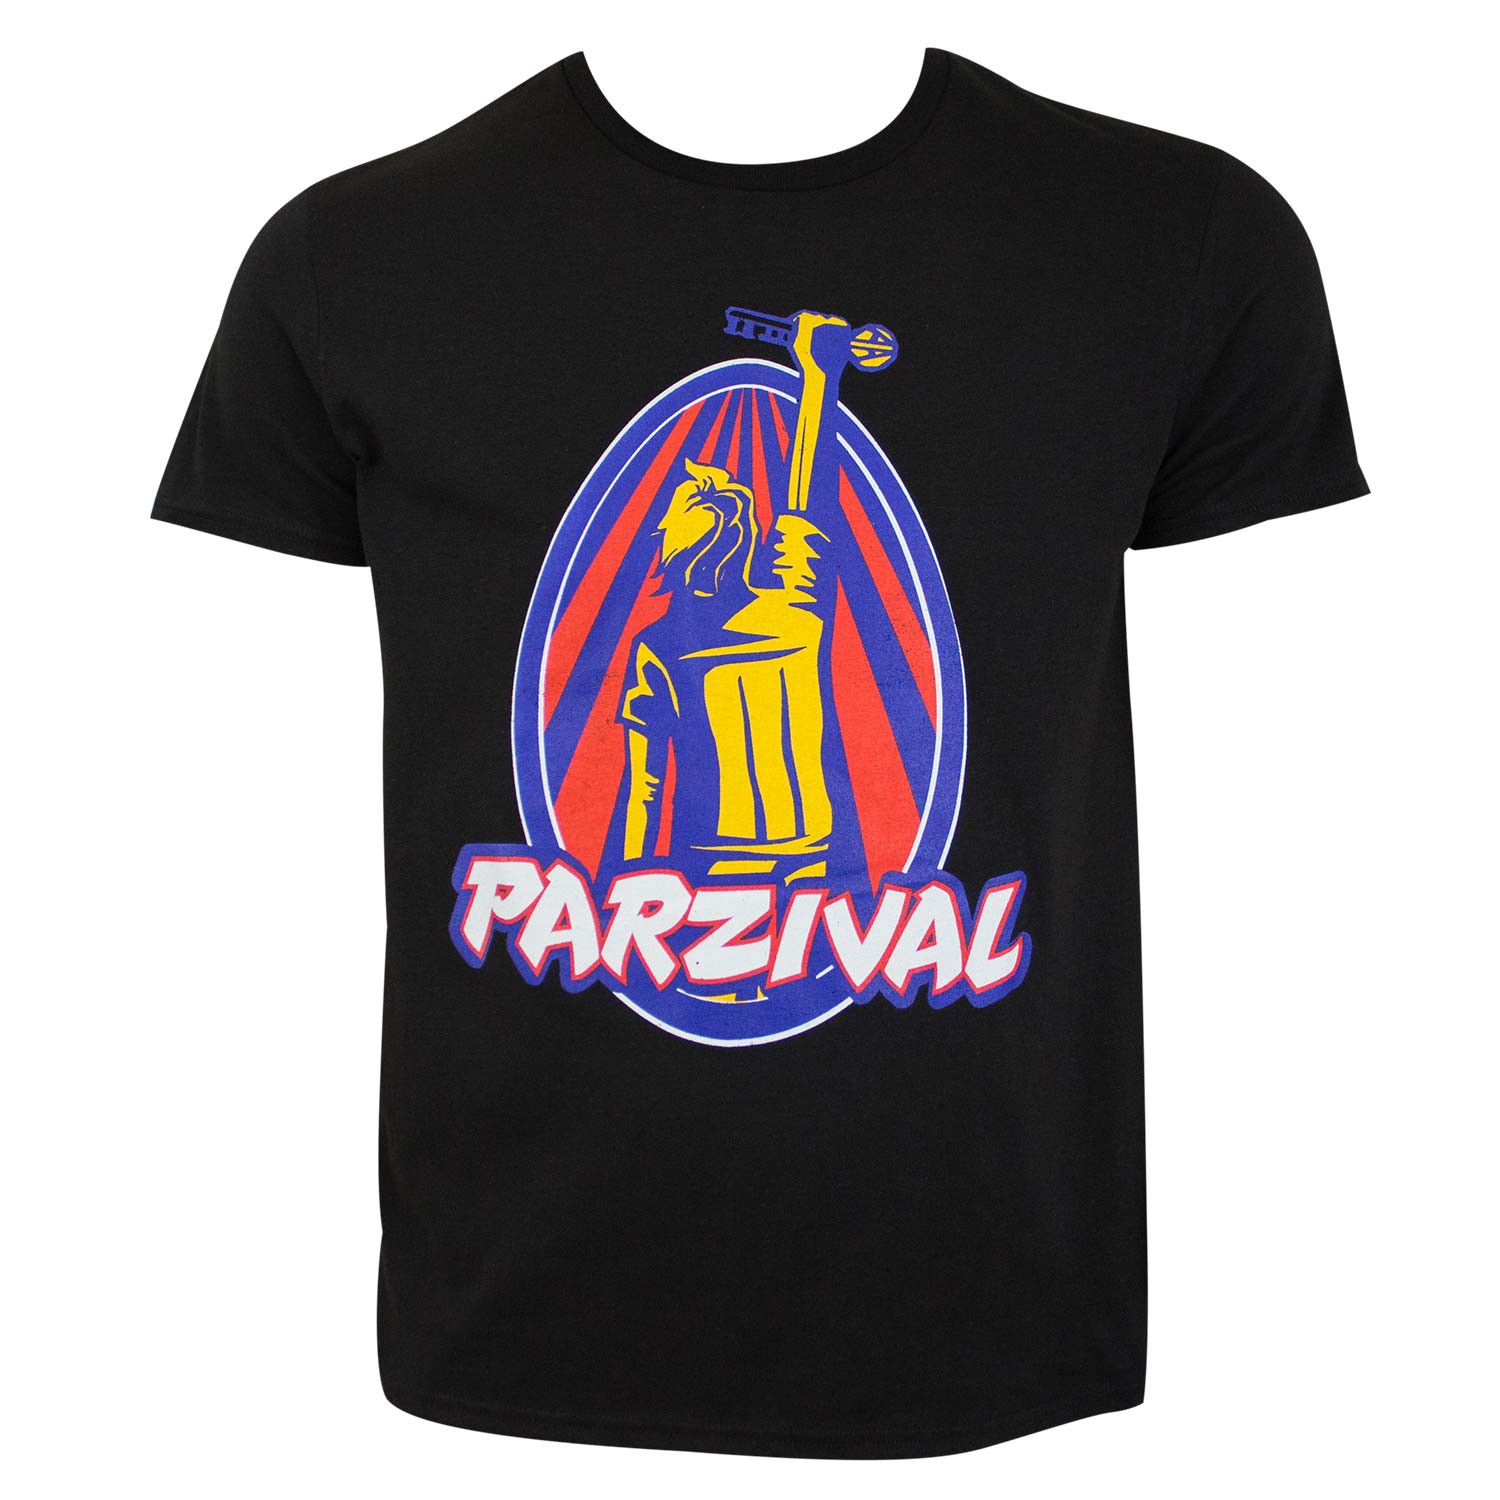 Ready Player One Parzival Men's Black T-Shirt